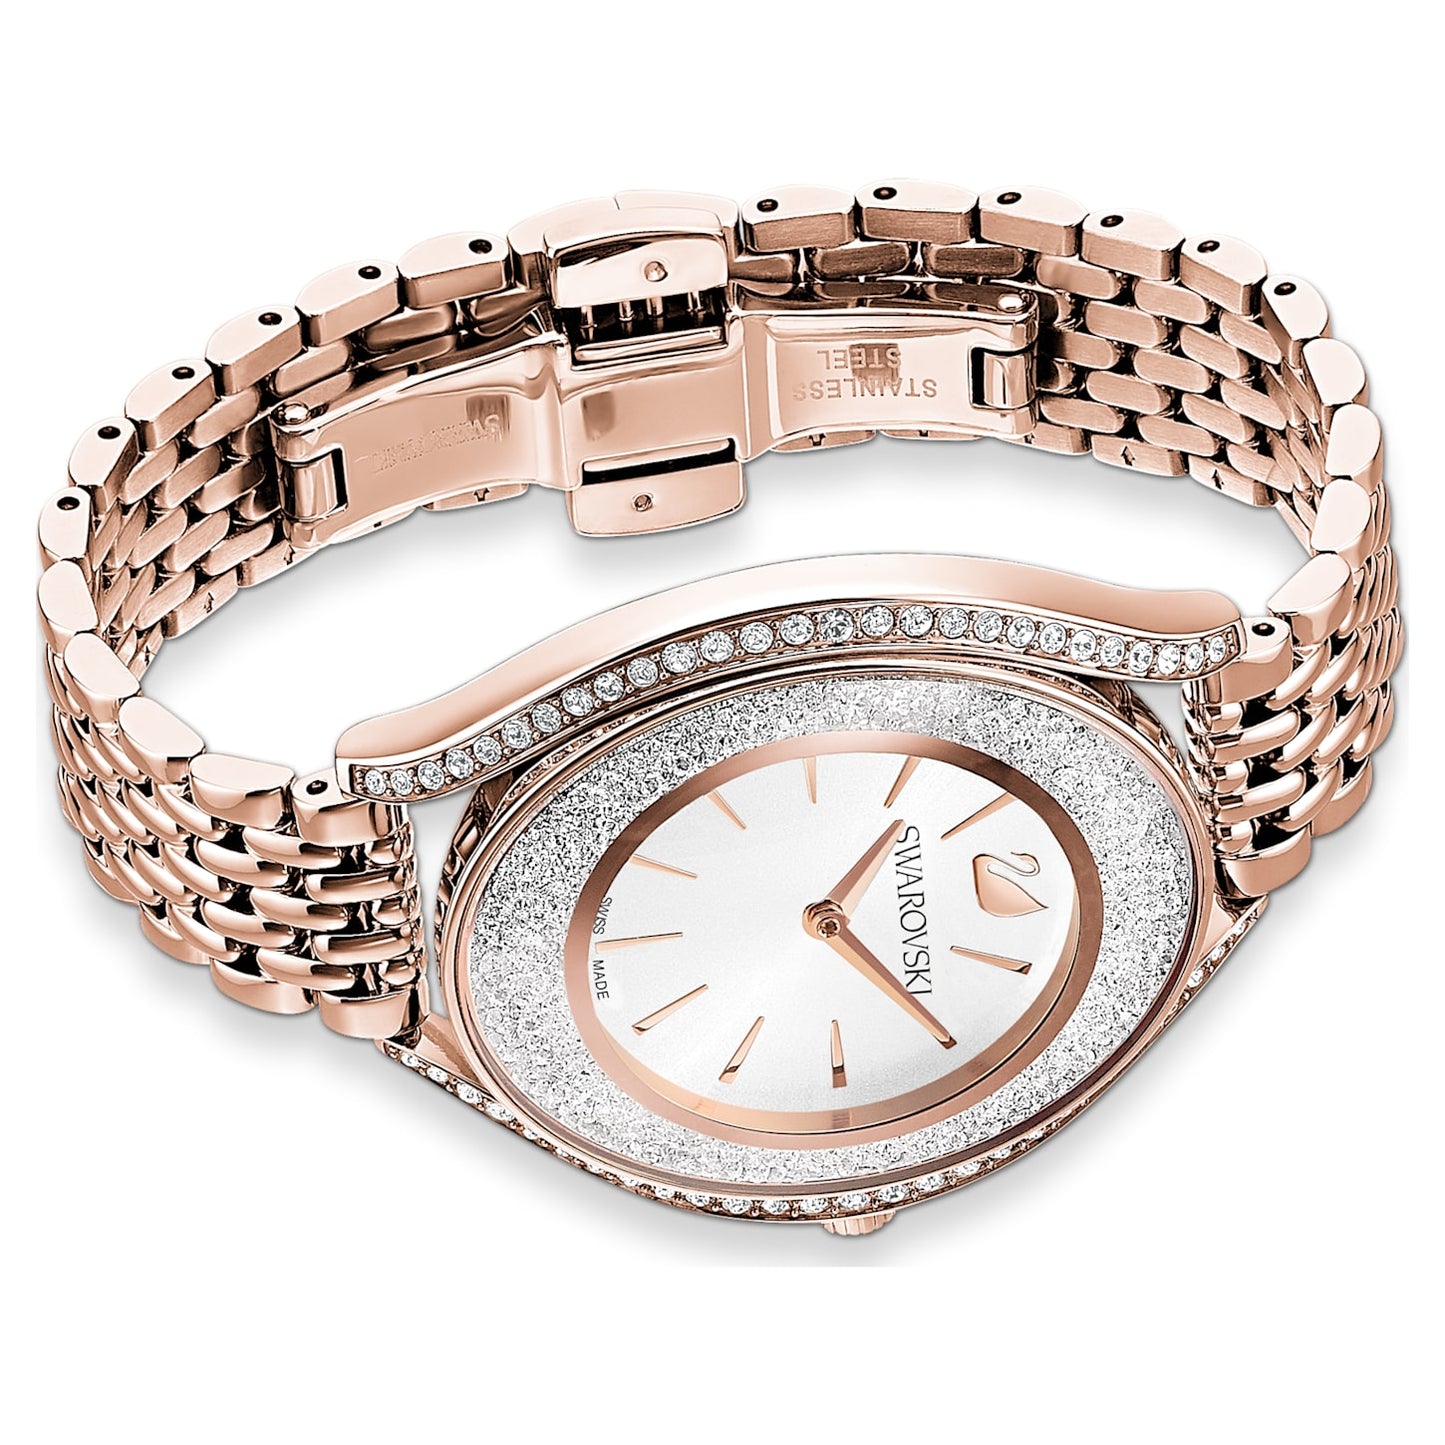 Crystalline Aura watch Swiss Made, Metal bracelet, Rose gold tone, Rose gold-tone finish